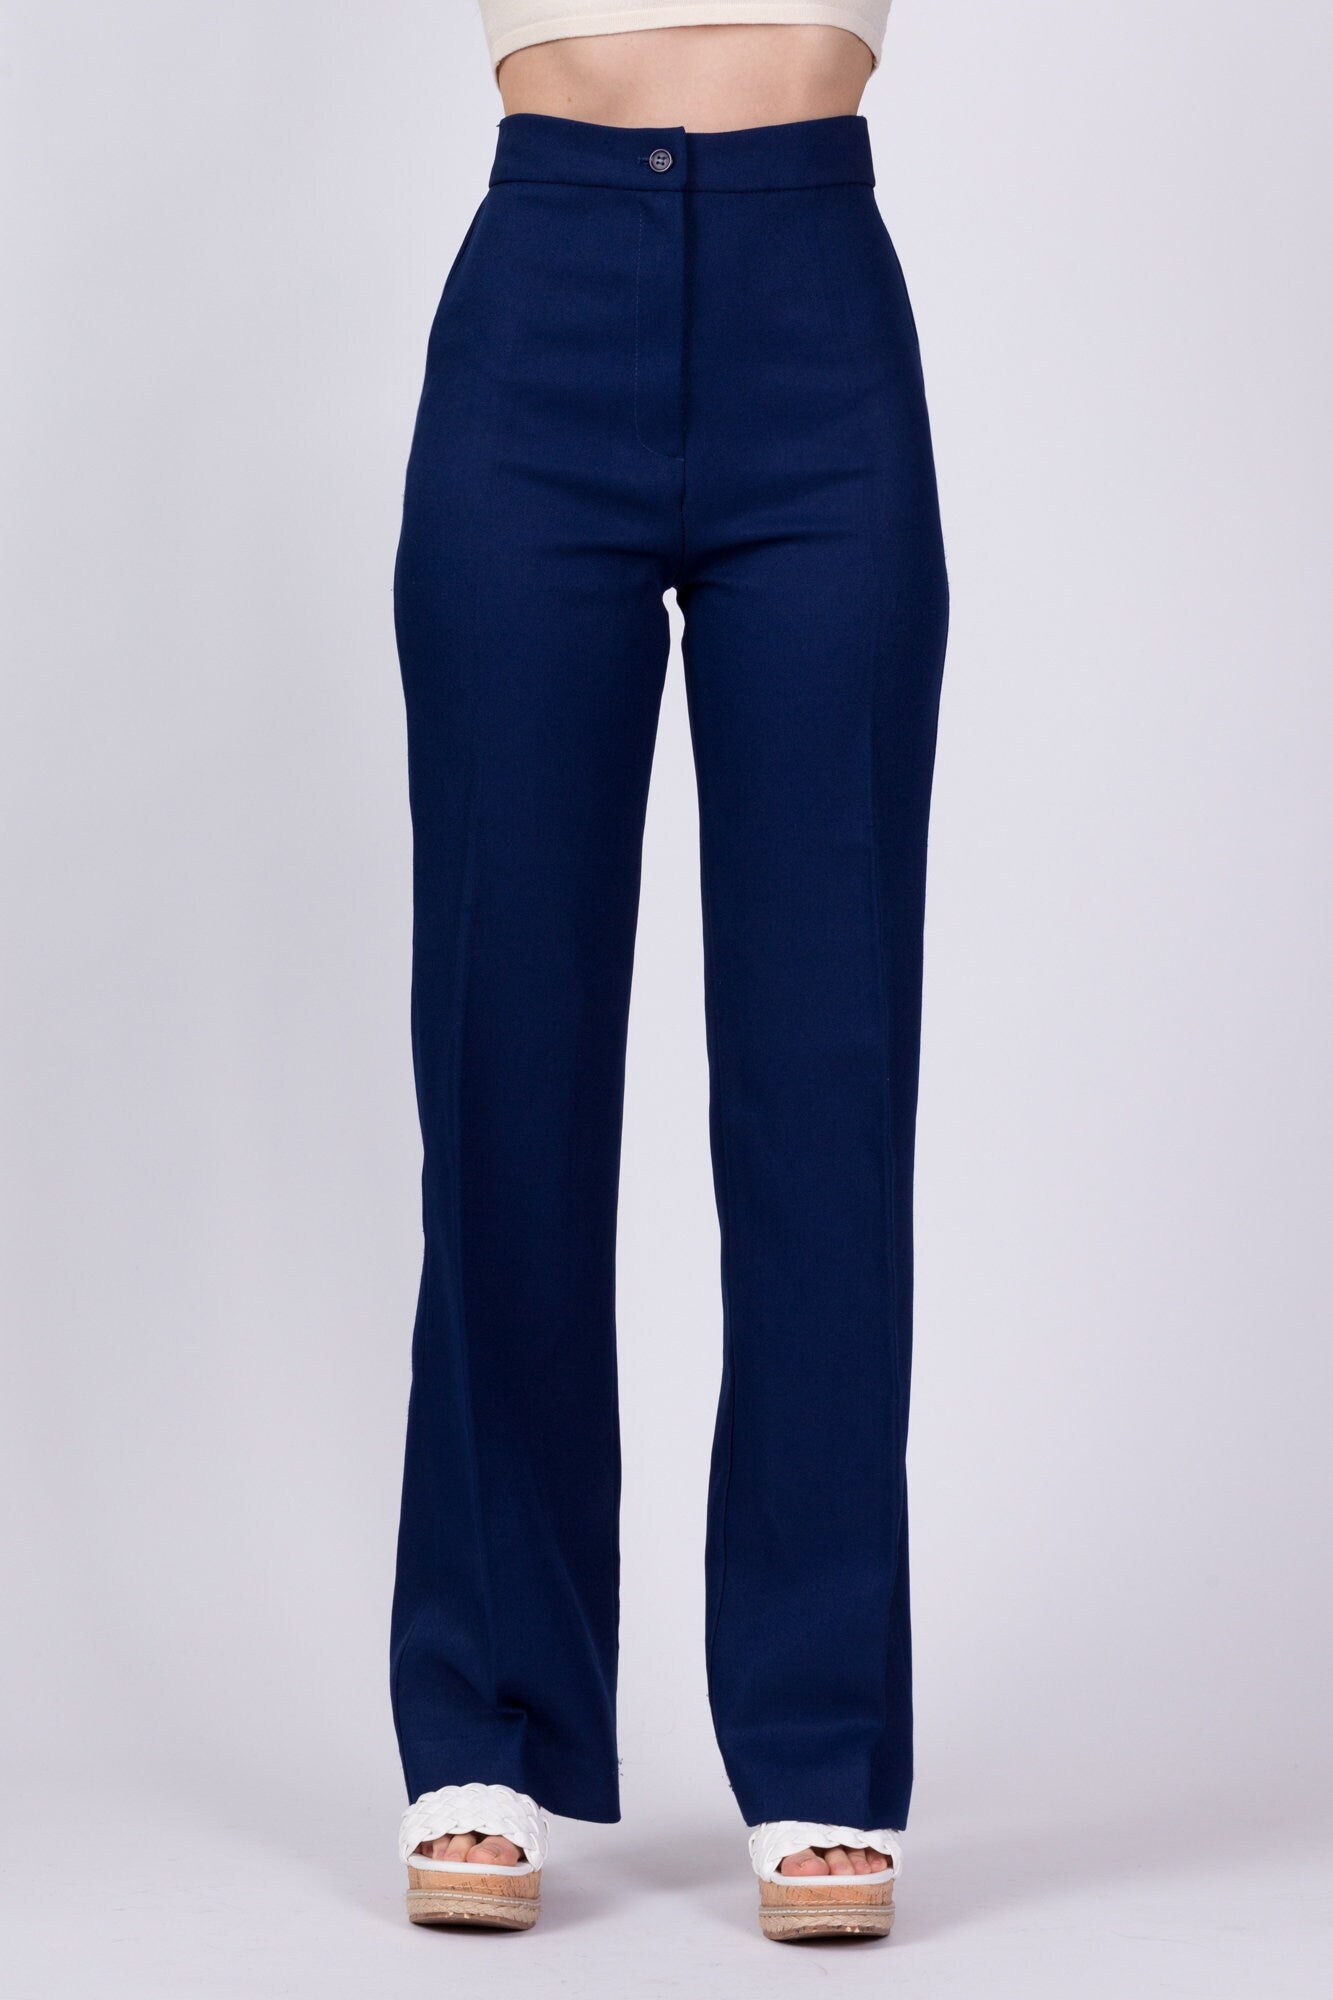 70s Navy Blue High Waist Pants - Extra Small, 23"-24" 